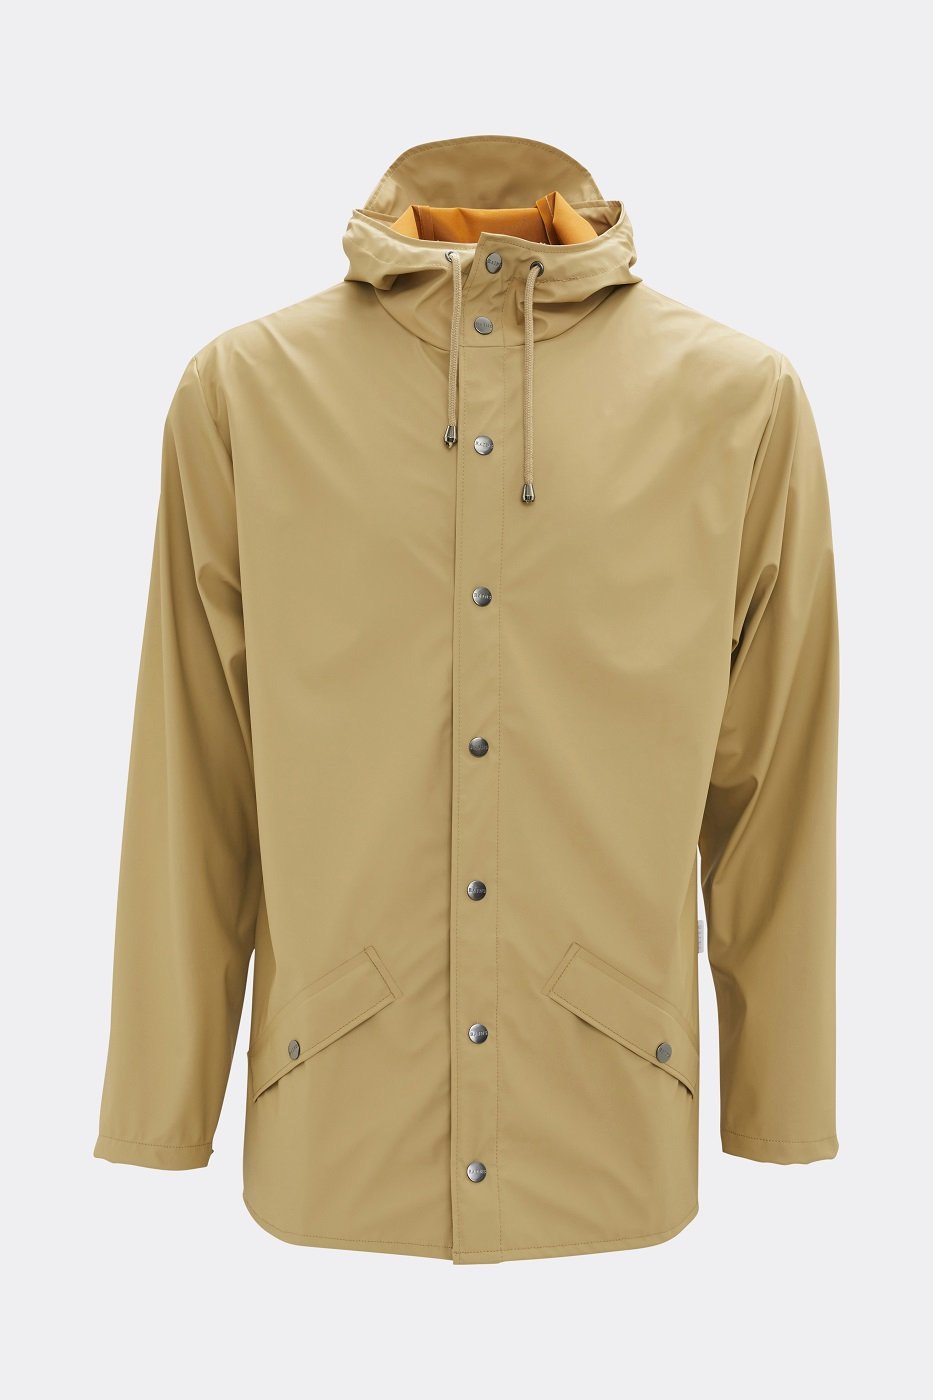 RAINS Jacket: Old-Fashioned Rainwear with Modern Danish Design